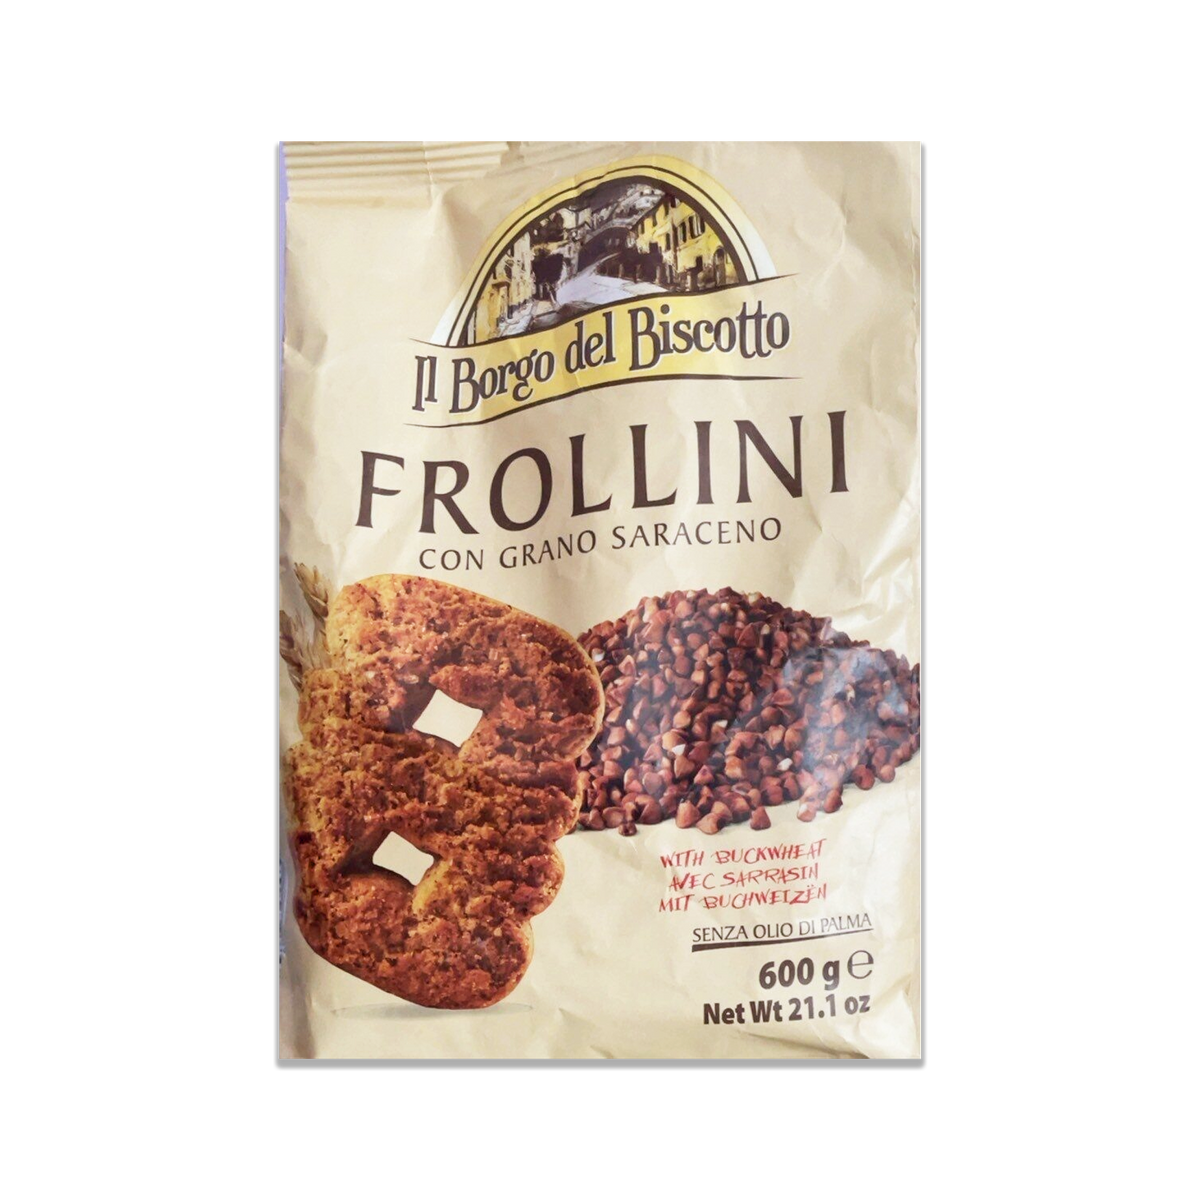 ARMONICHE - Frollini with Buckwheat flour 600g